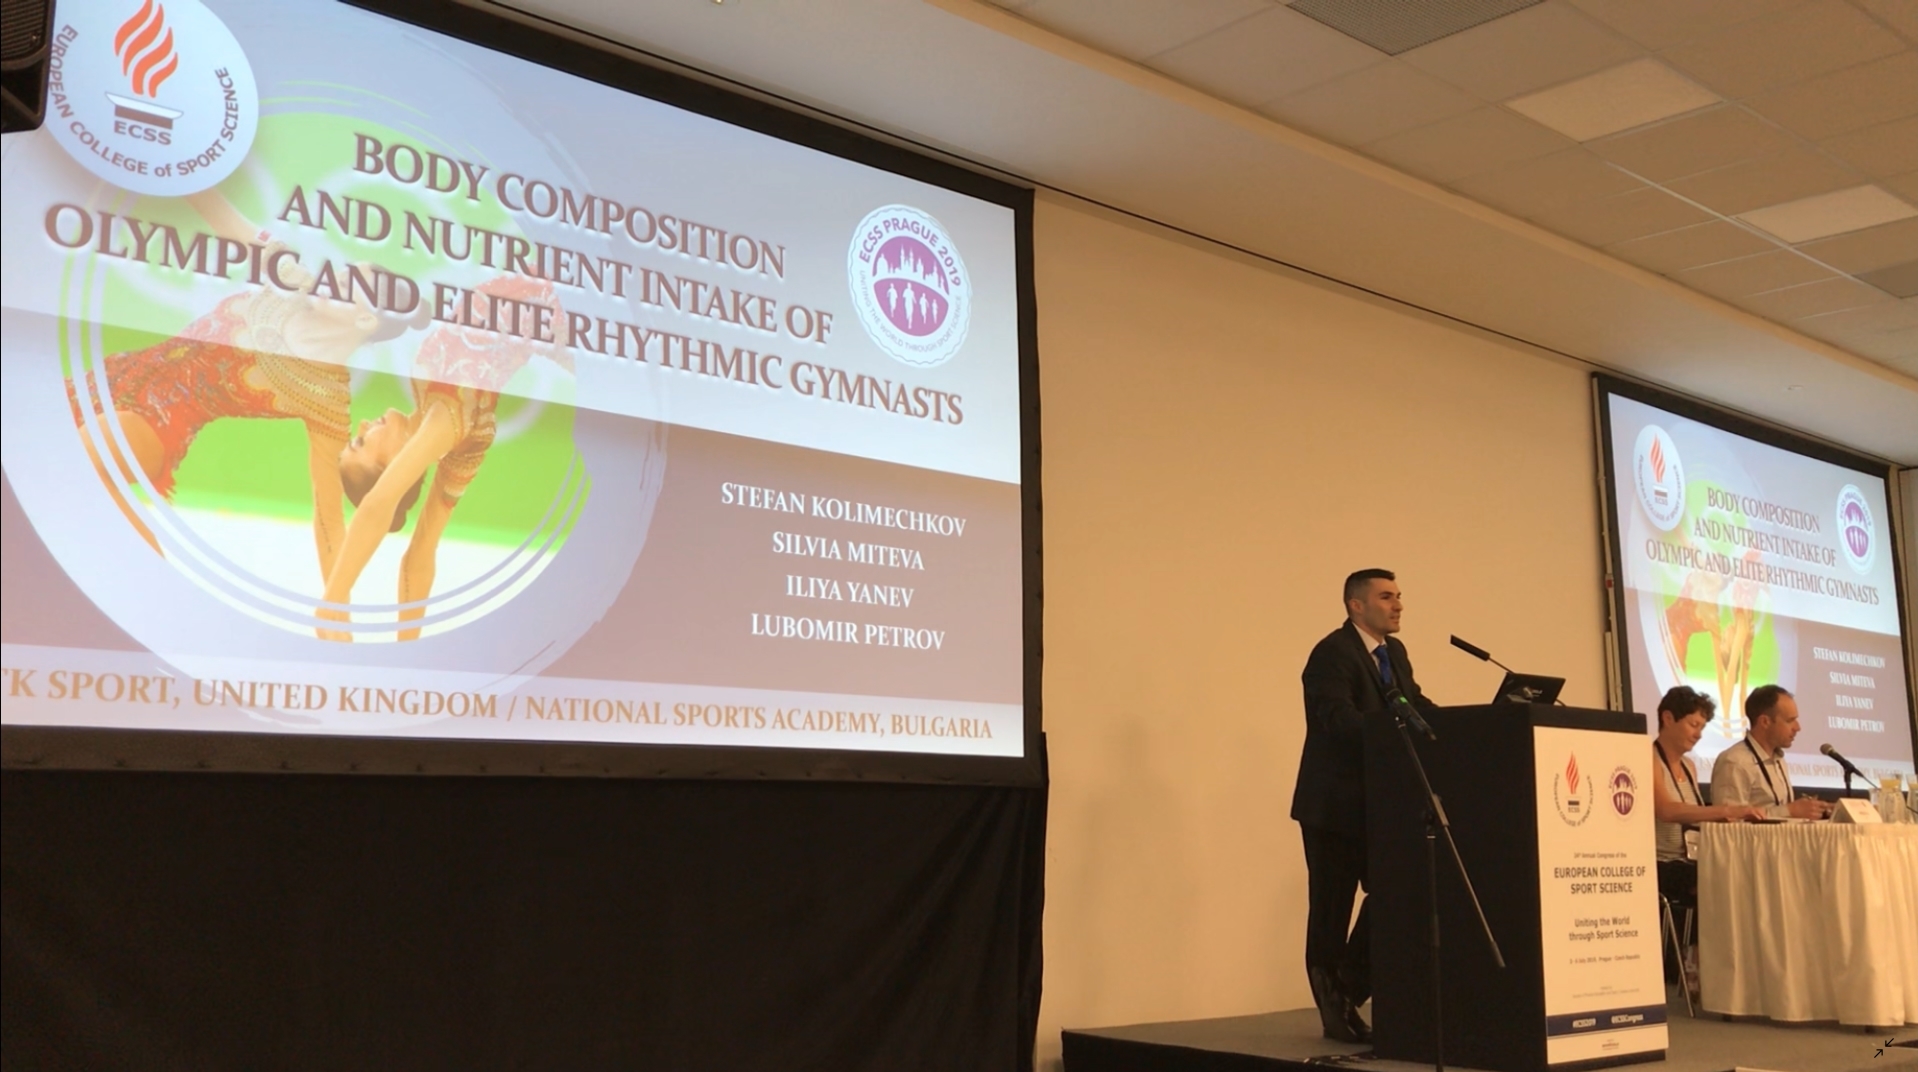 ECSS 2019 - body composition and nutrition of elite rhythmic gymnastics